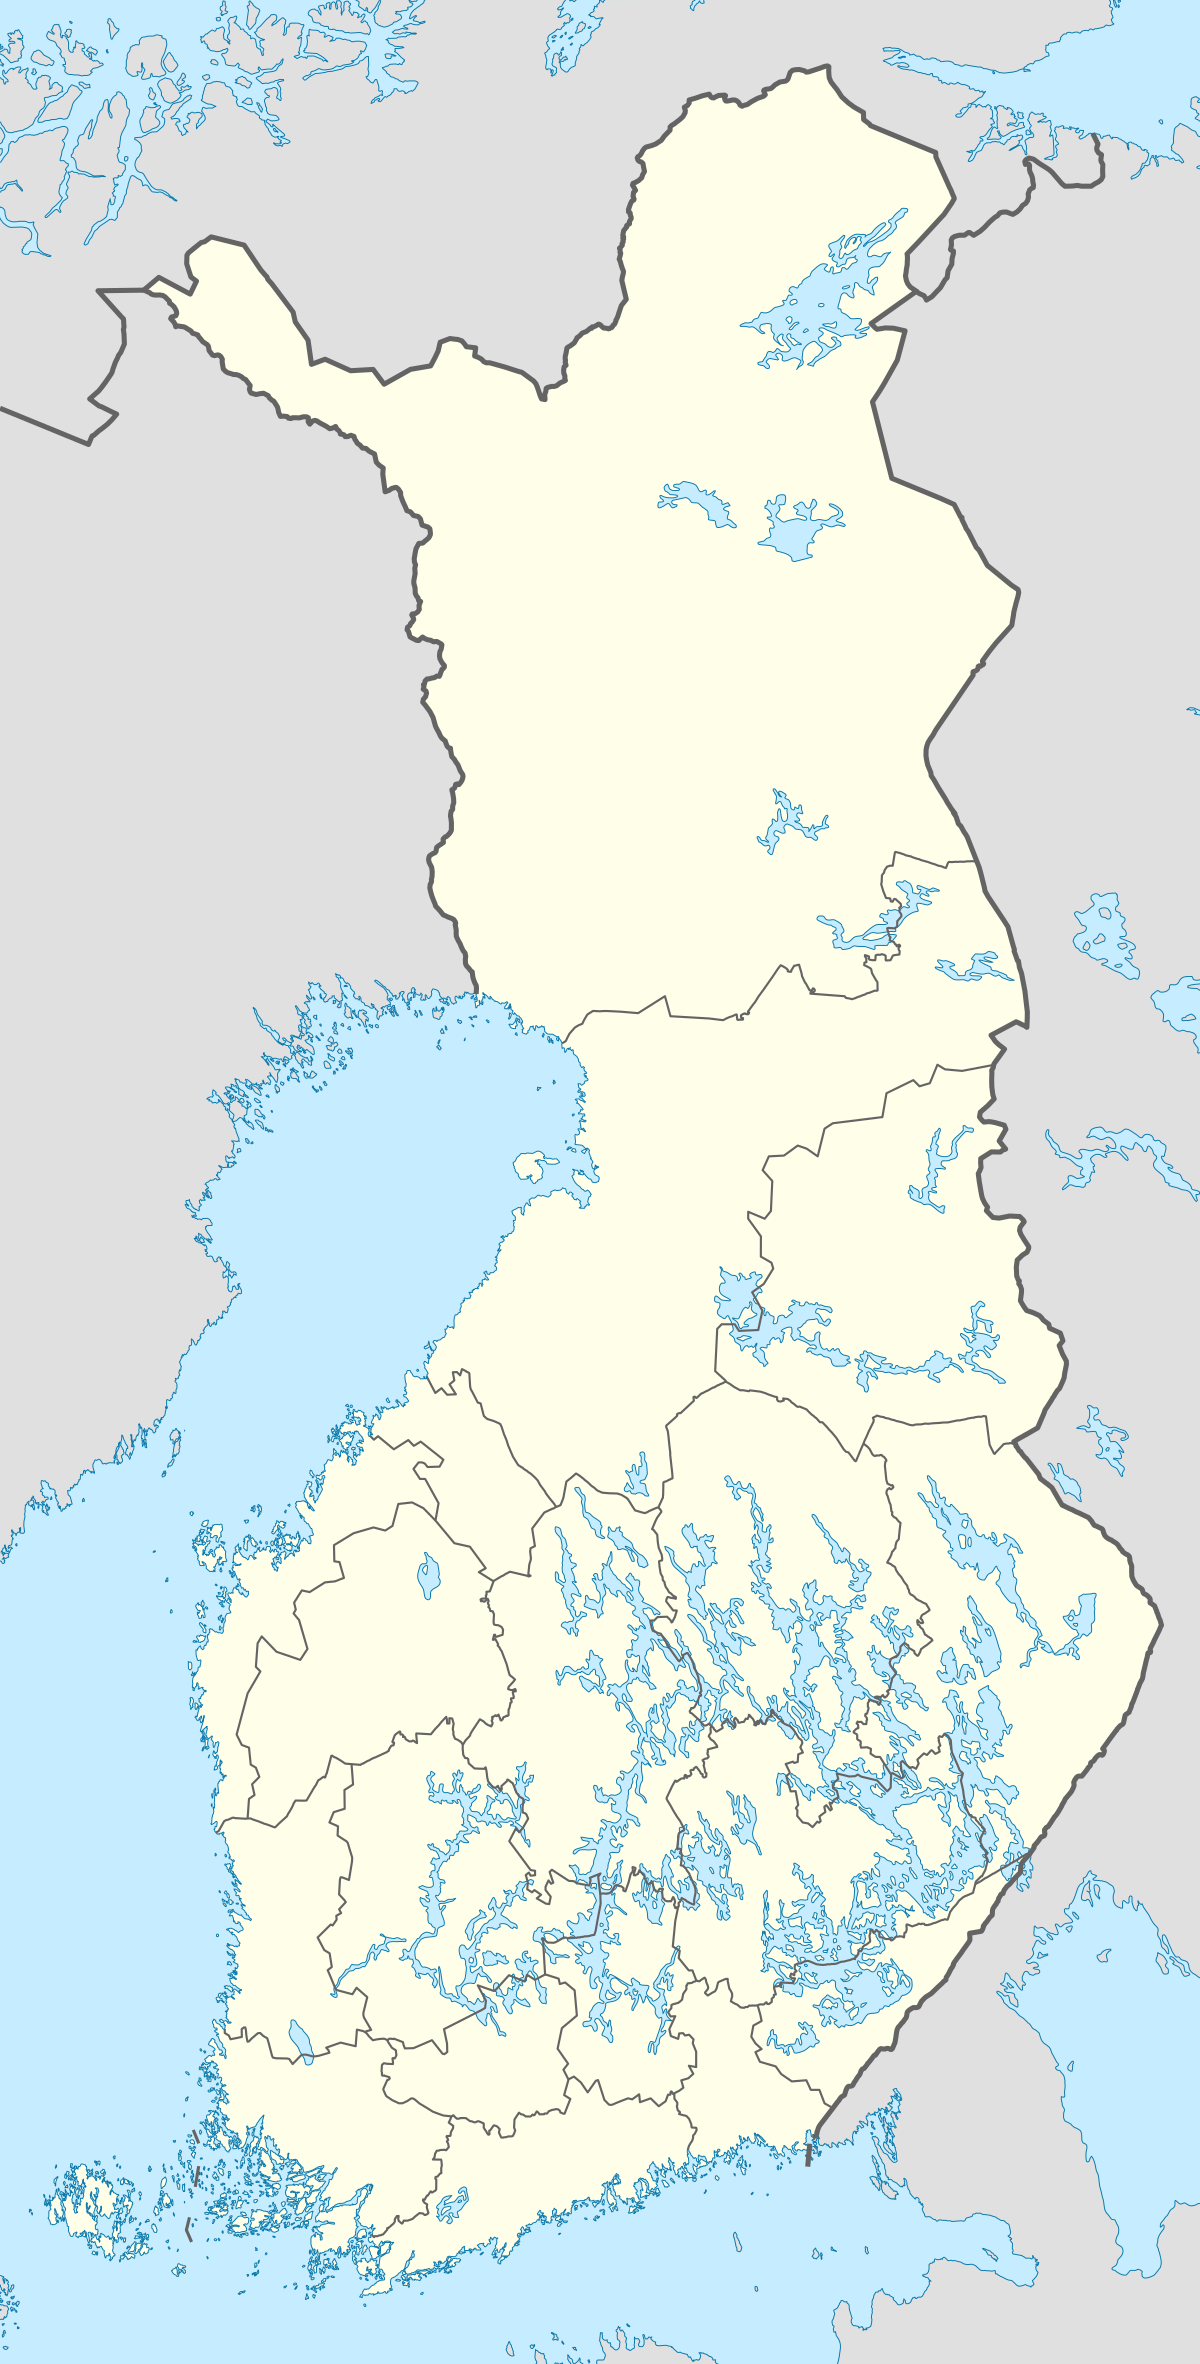 Voir sur la carte : Finlande